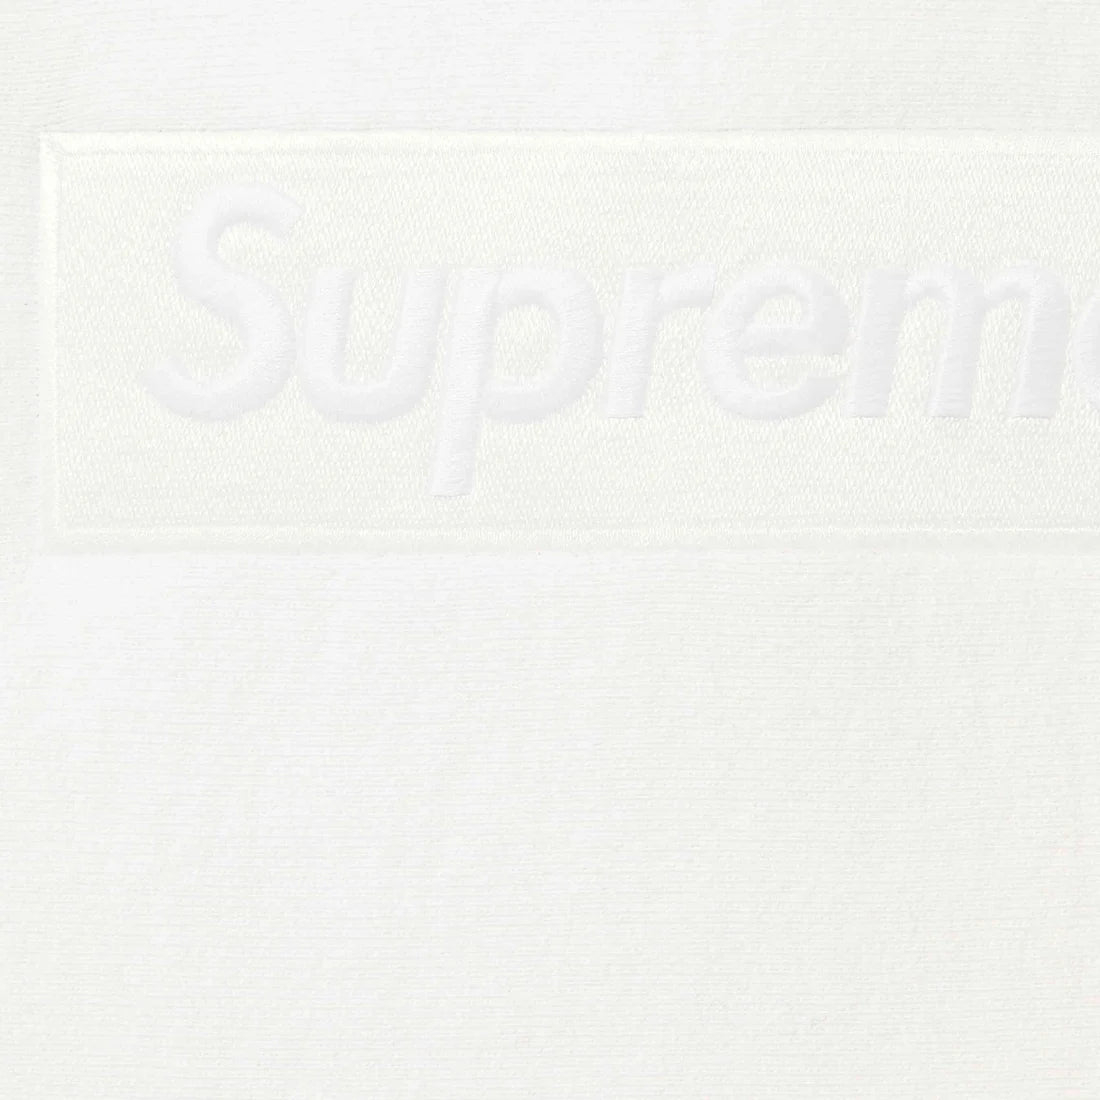 Supreme Box Logo Hooded Sweatshirt 'White'